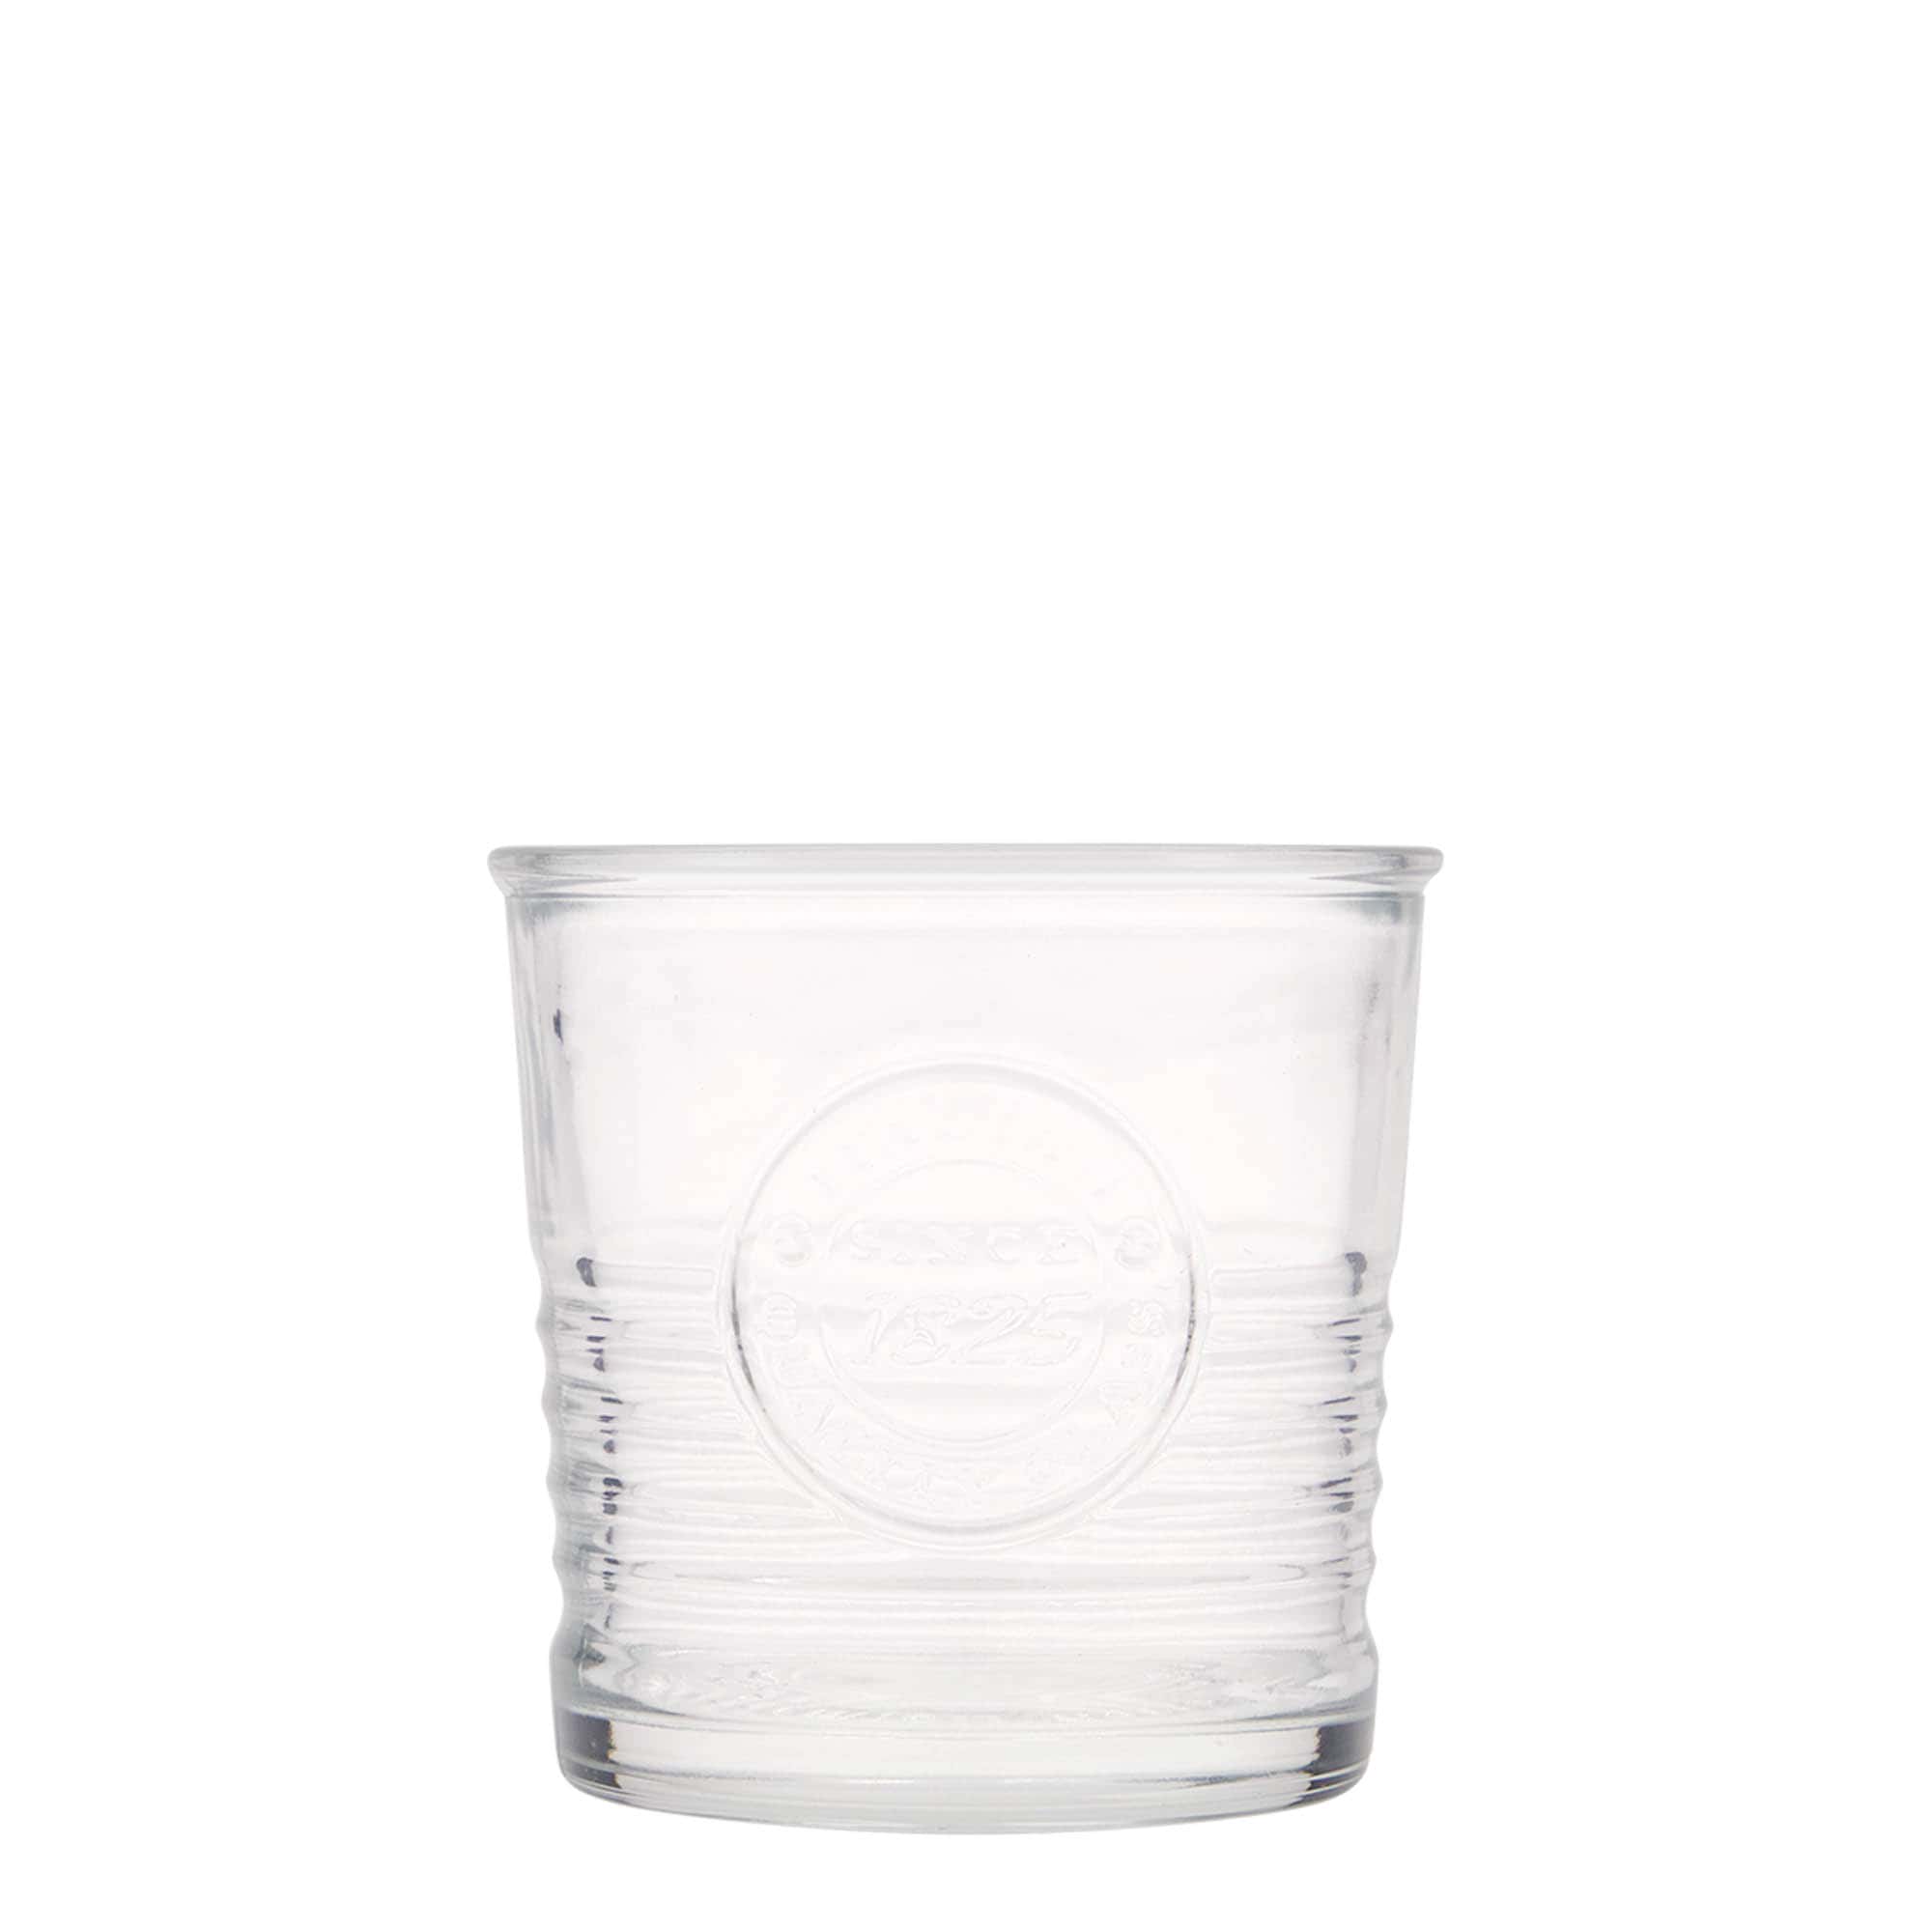 300 ml drinking glass 'Officina 1825', glass